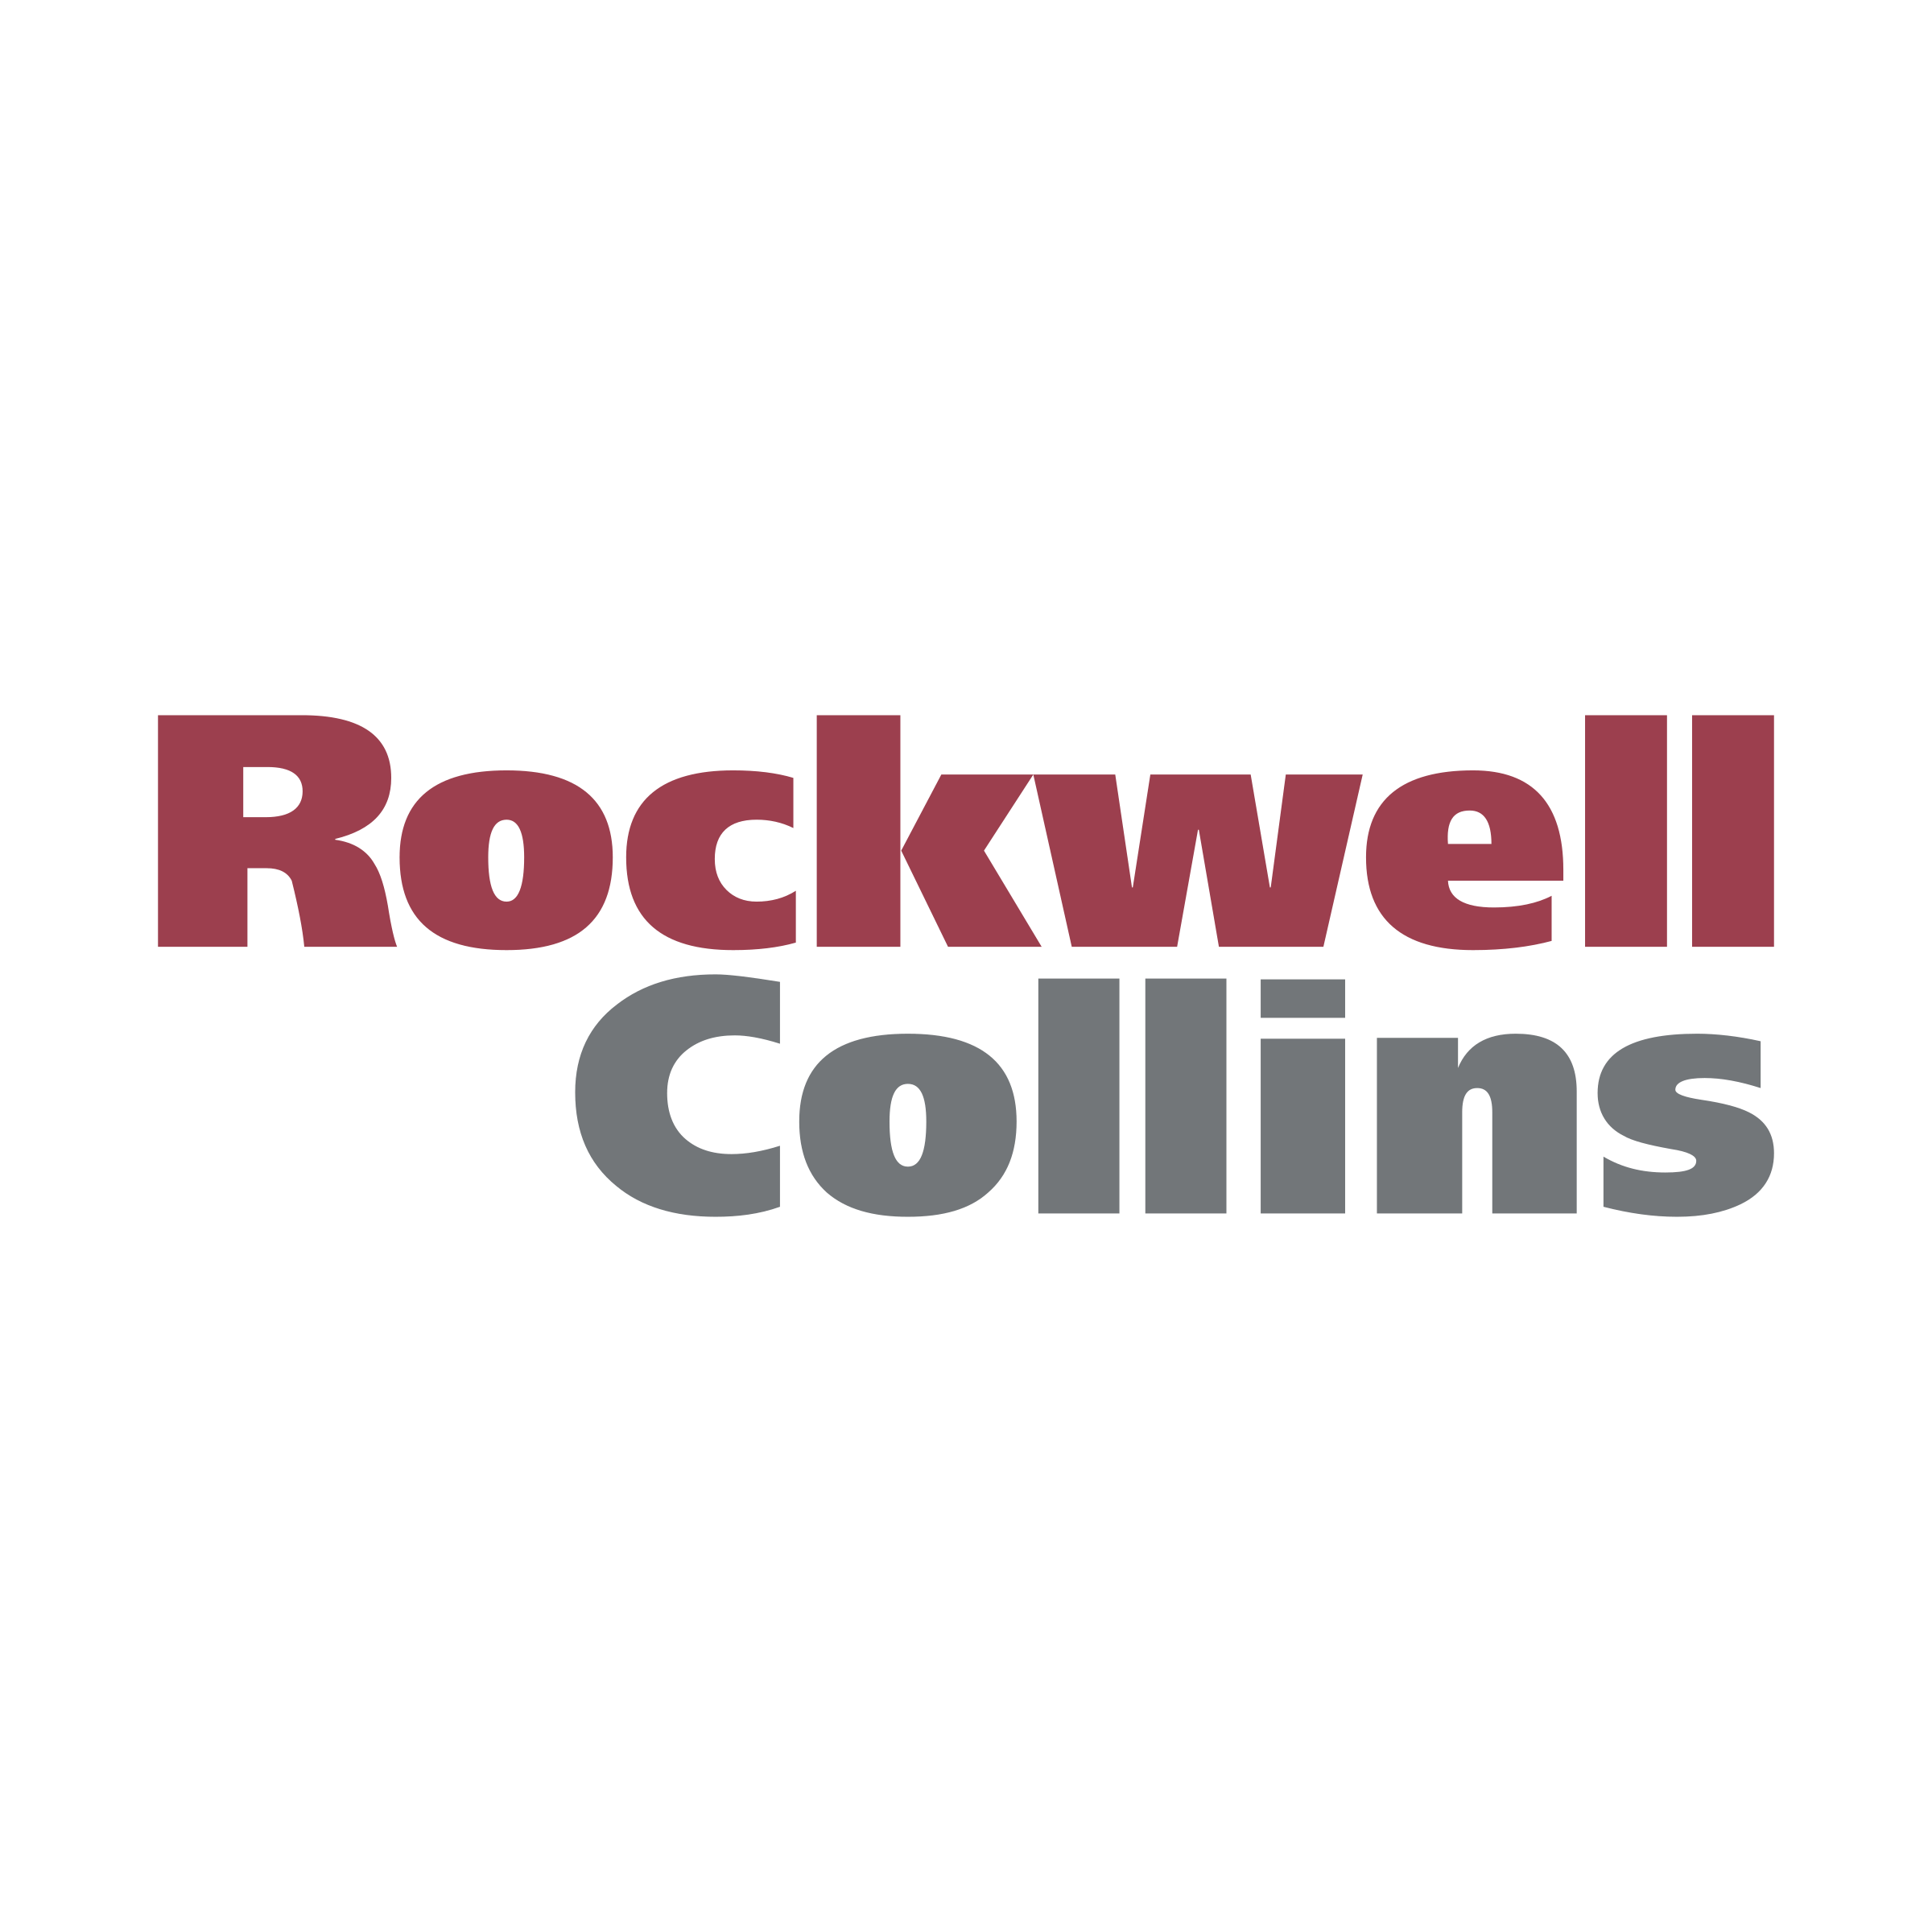 Rockwell Logo - Rockwell Collins Logo PNG Transparent & SVG Vector - Freebie Supply